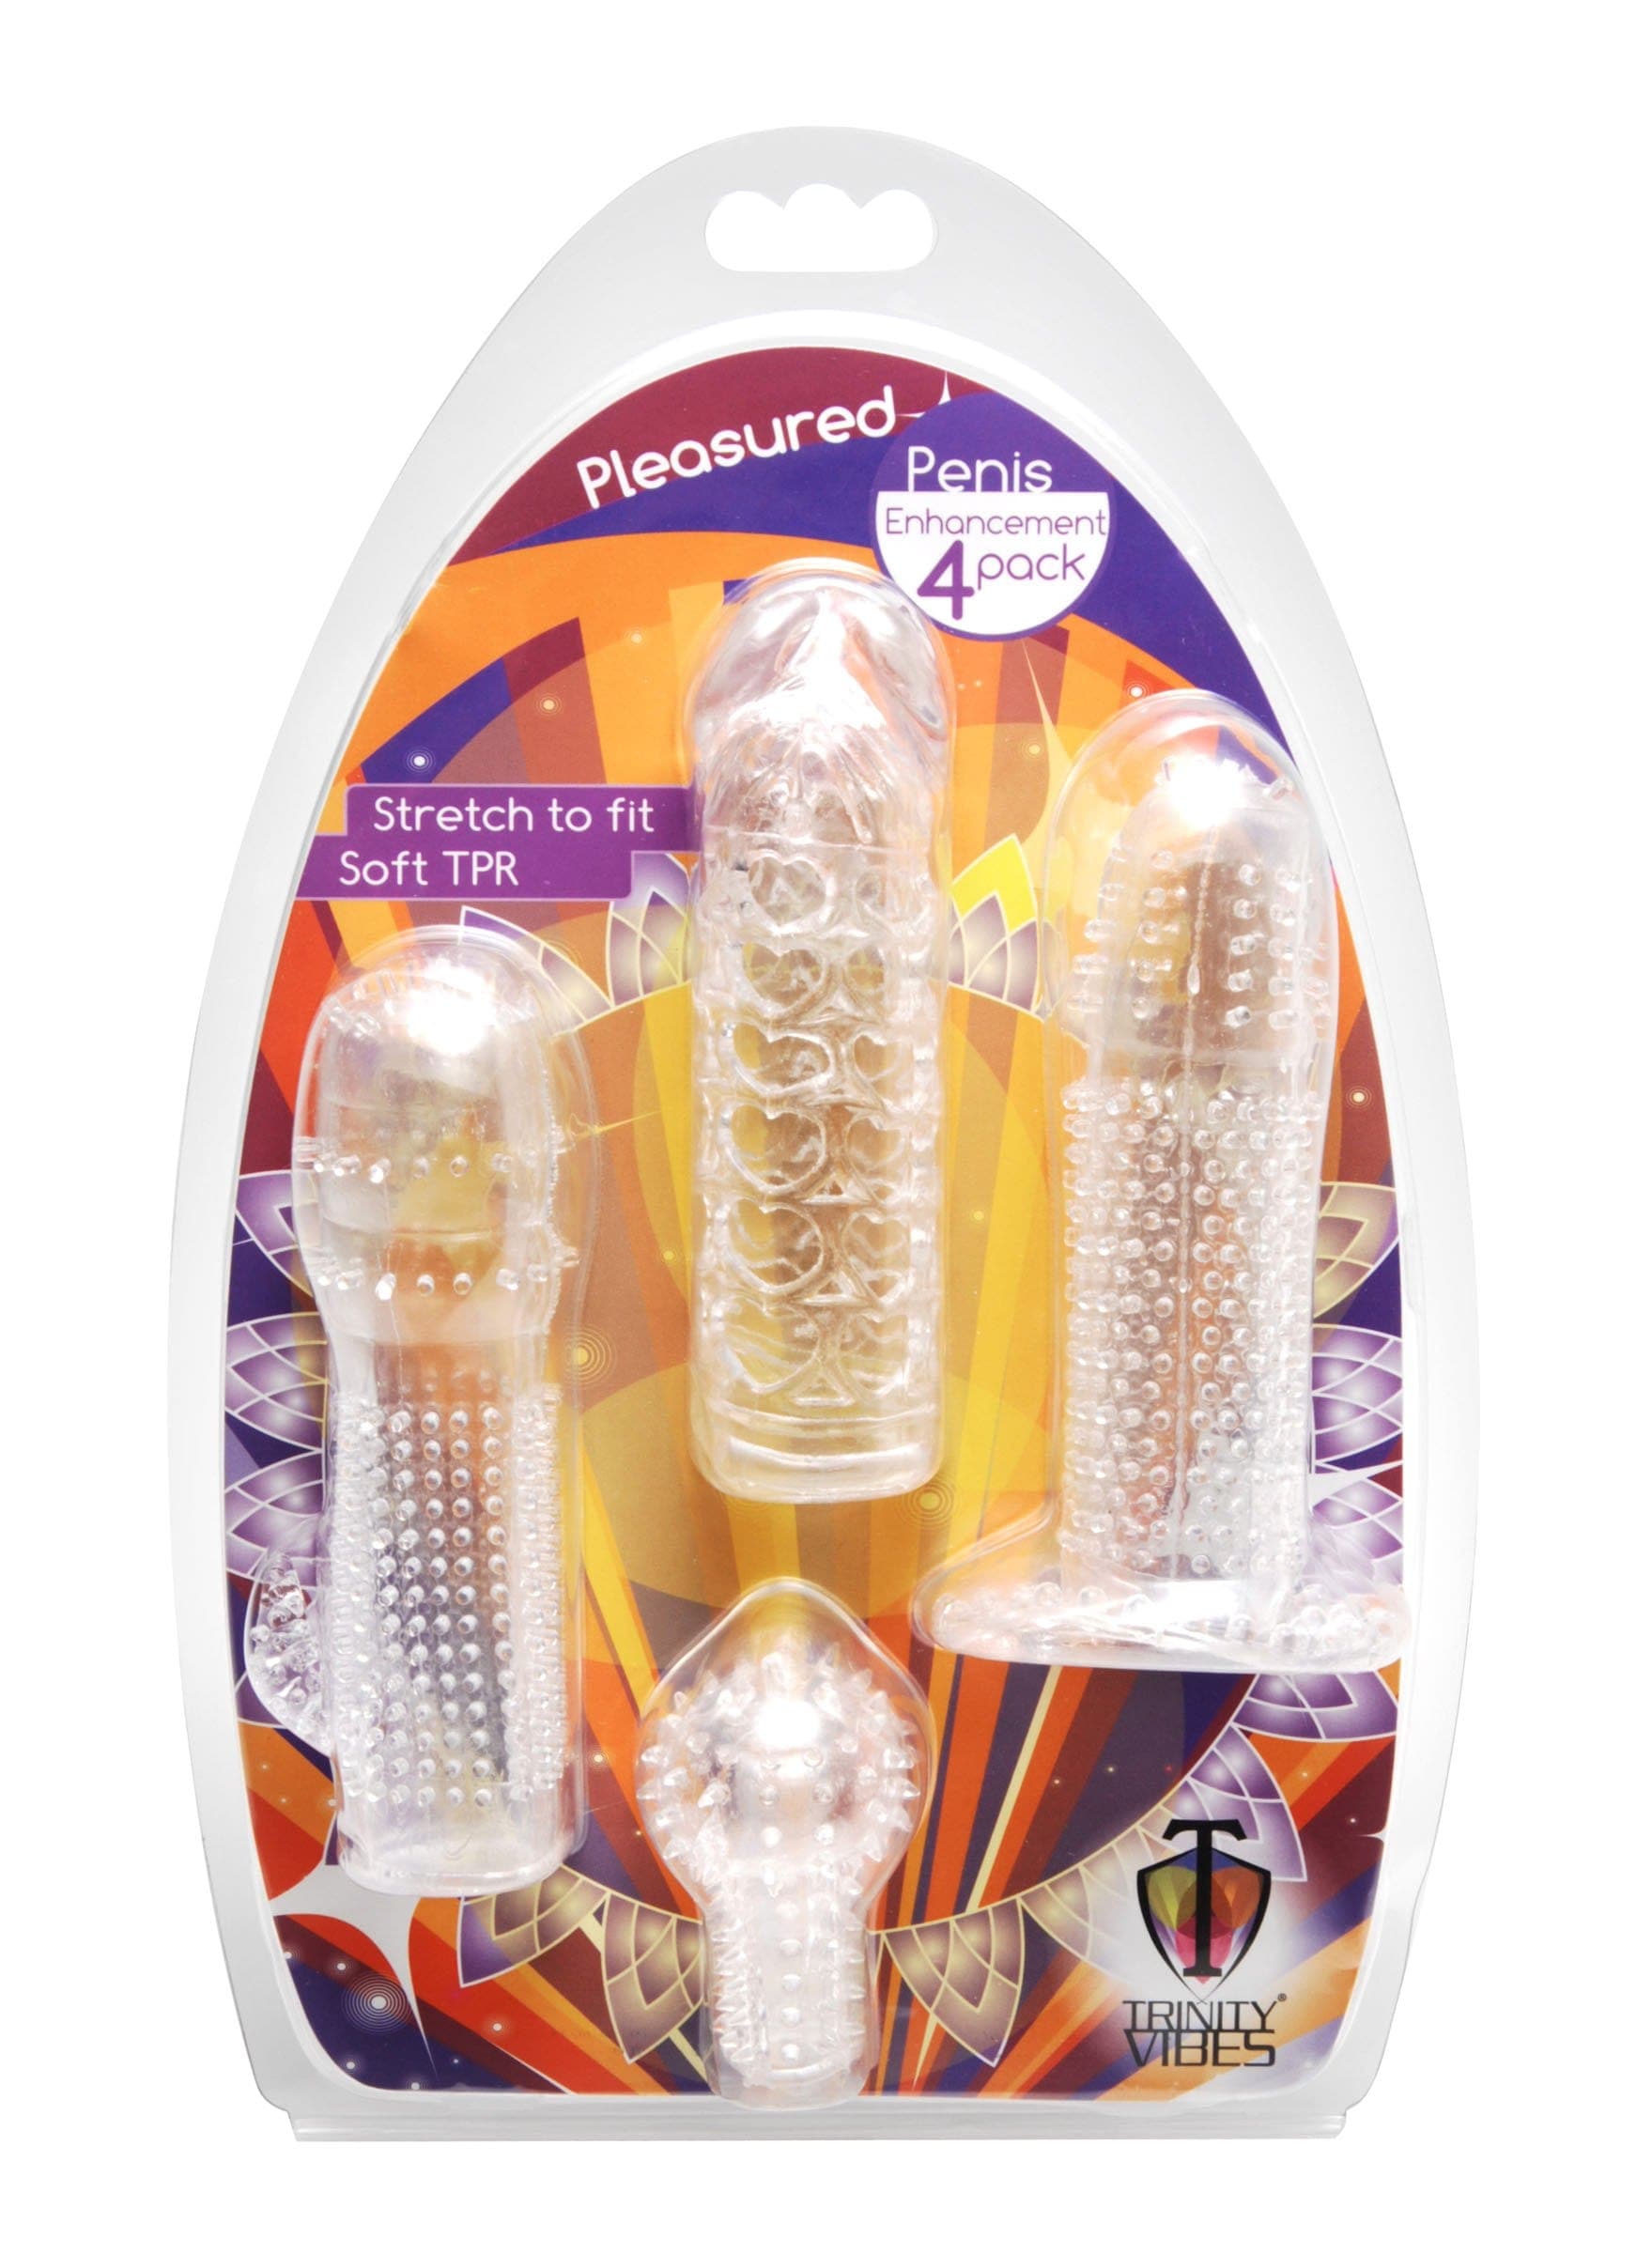 pleasure penis enhancement 4 pack